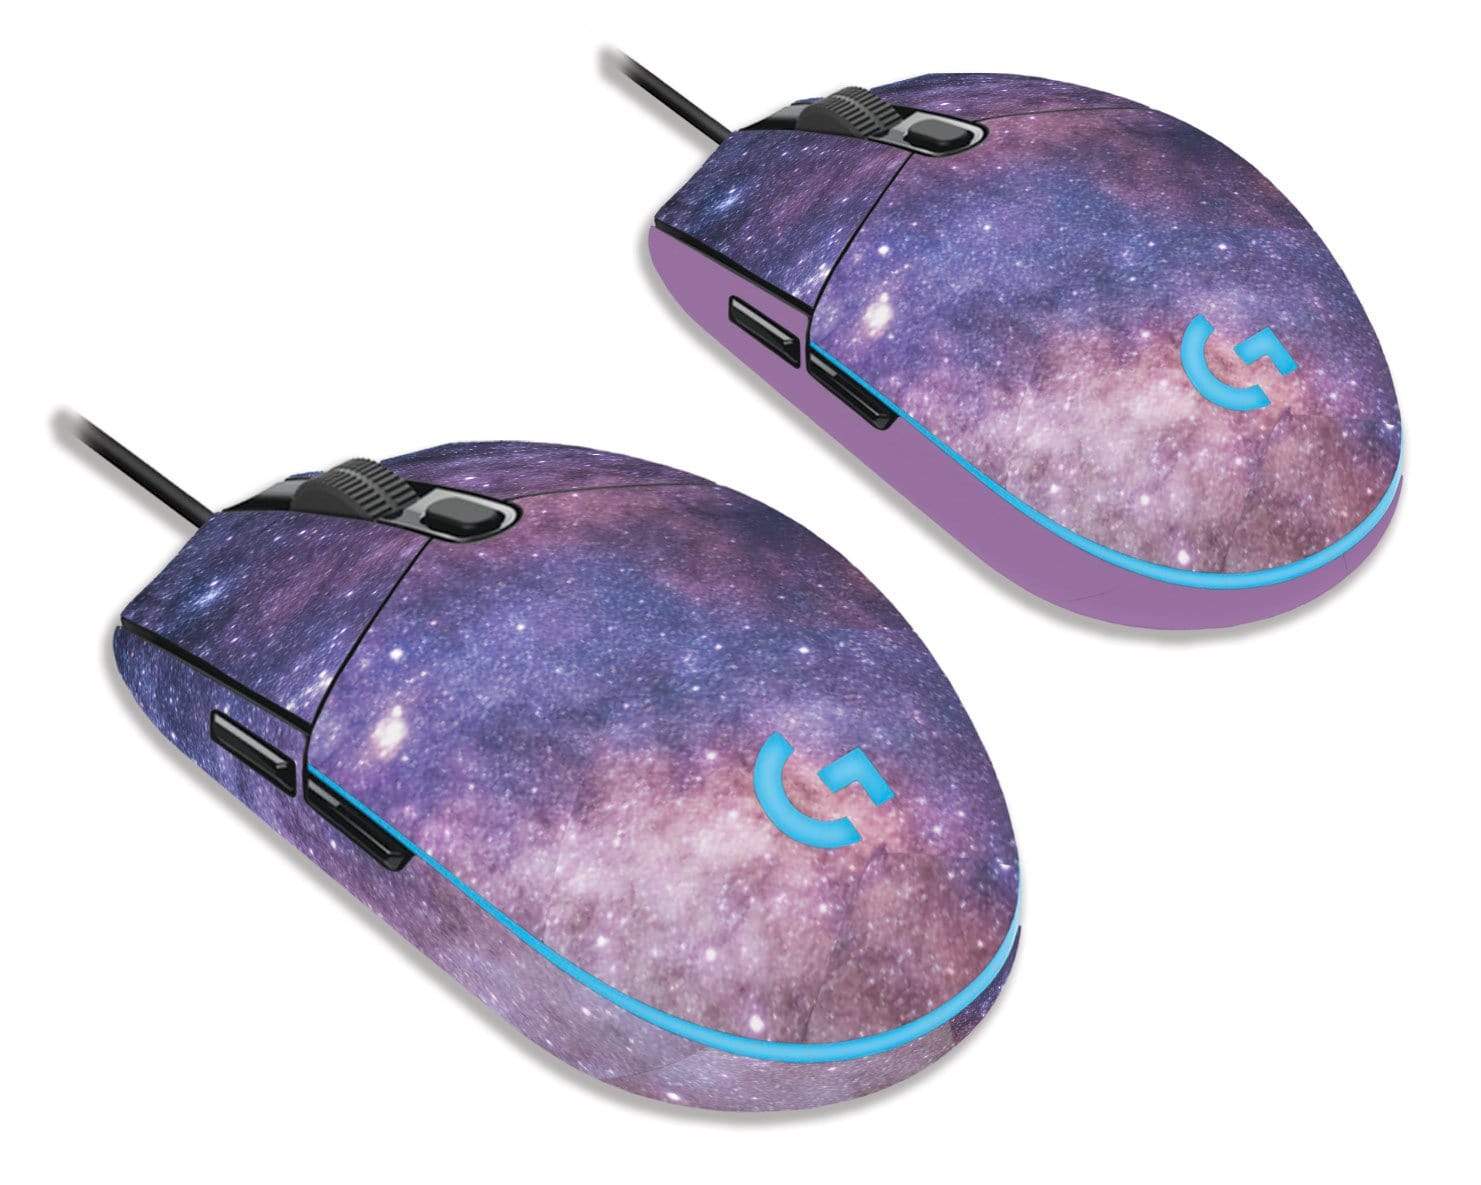 Purple Galaxy Prodigy Mouse Skin - StickyBunny